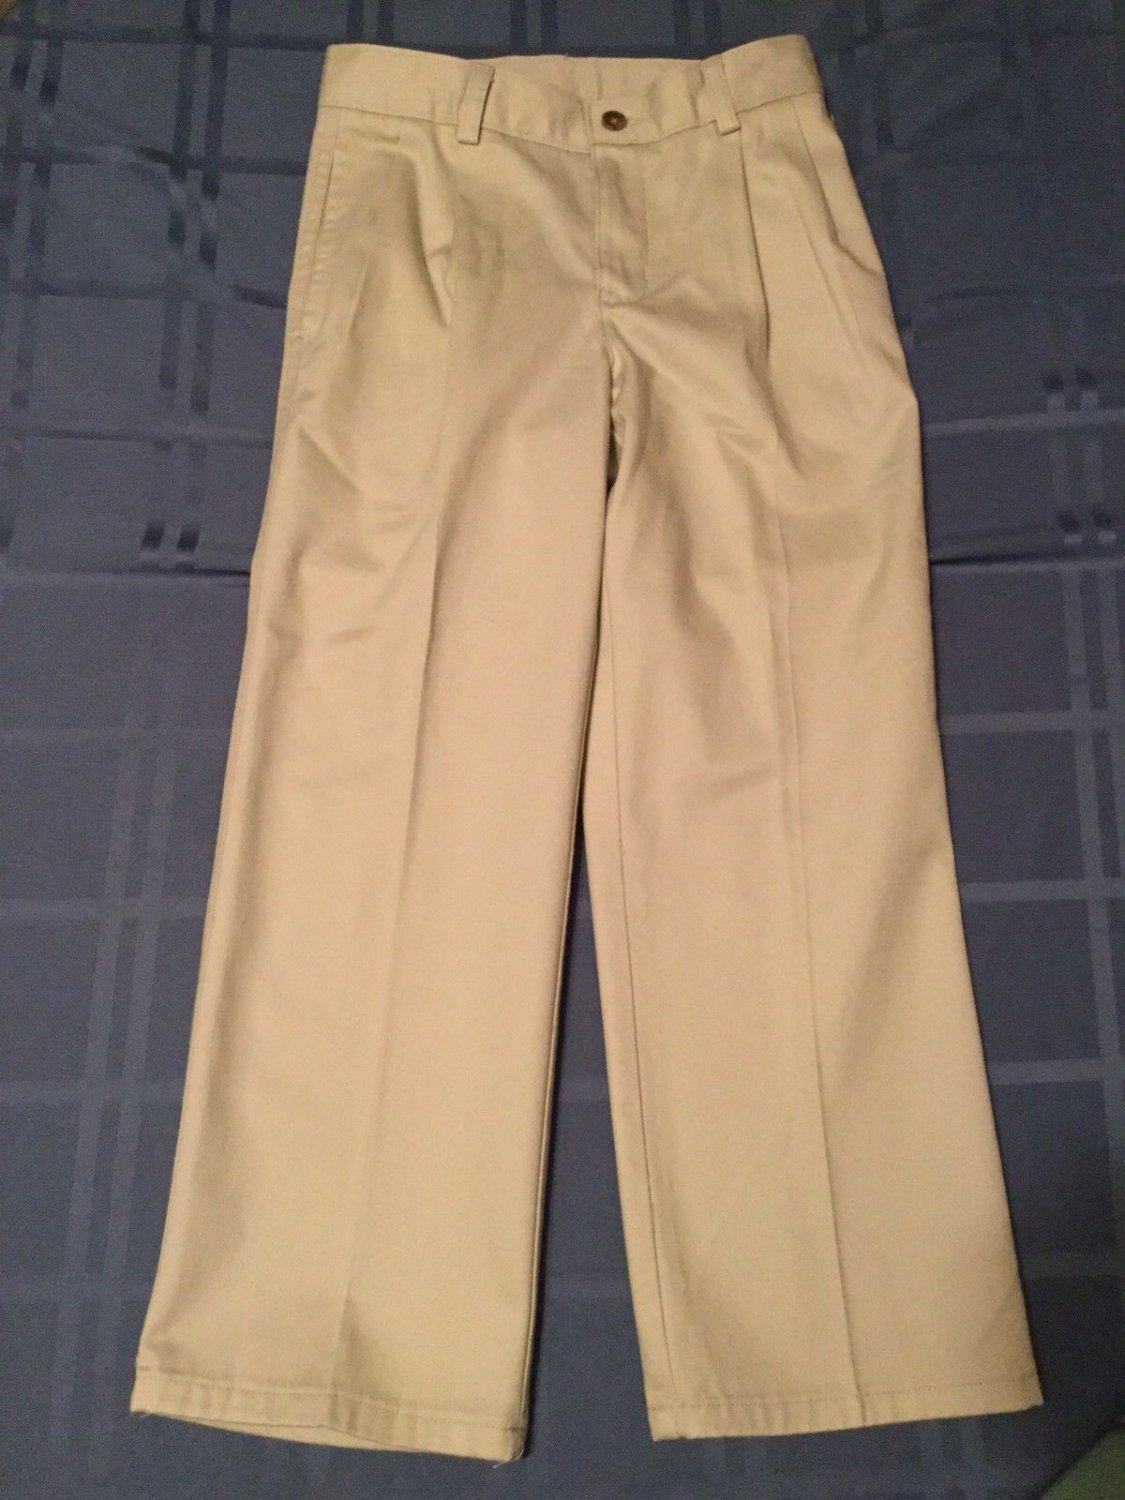 Boys Size 14 Regular Chaps pants khaki uniform pleated pants